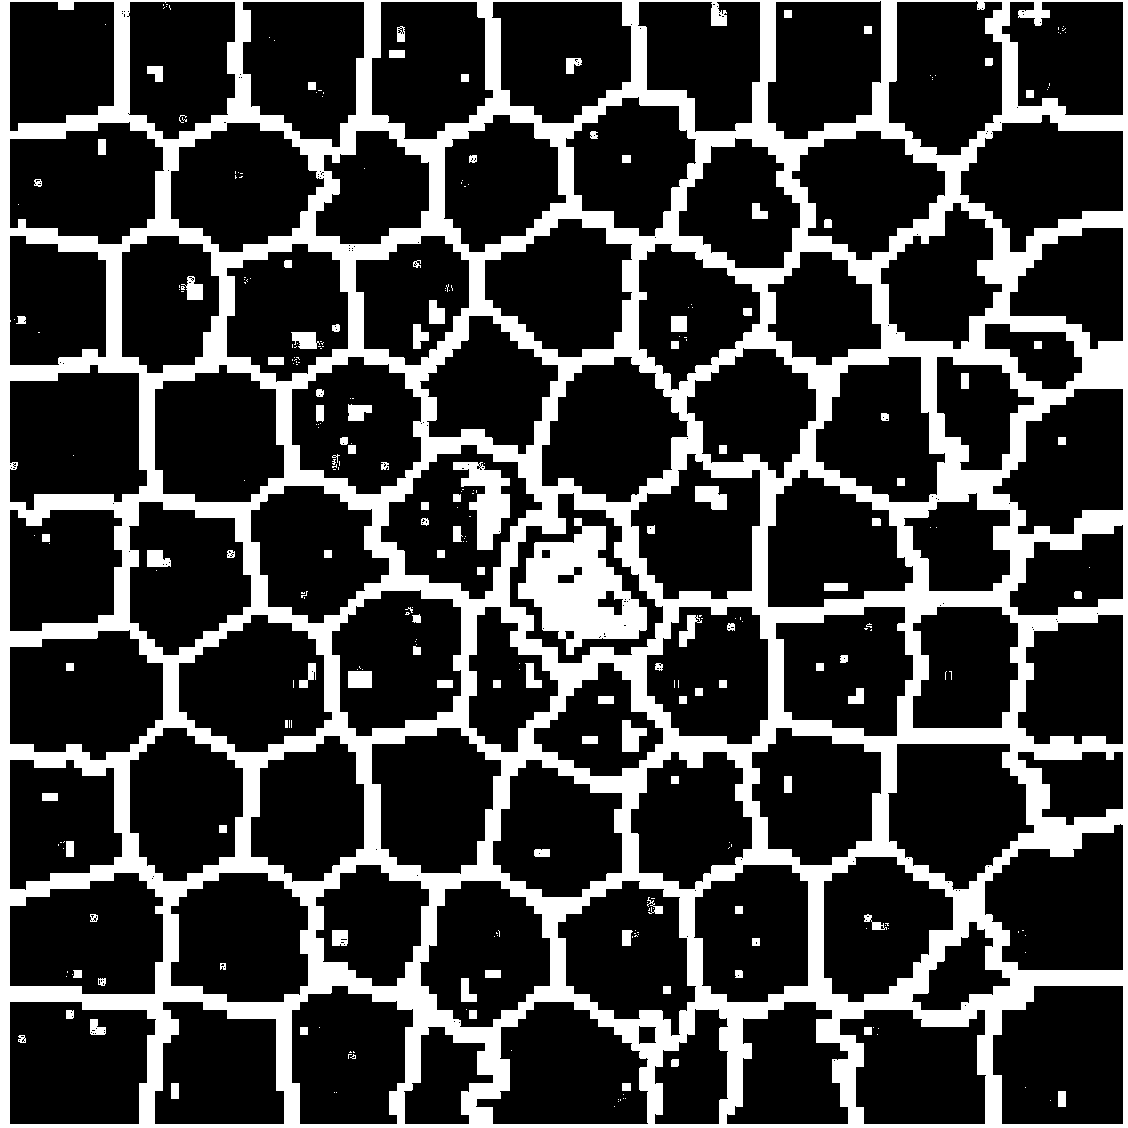 SAR image segmentation method for bee colony and gray association algorithm on basis of superpixel blocks